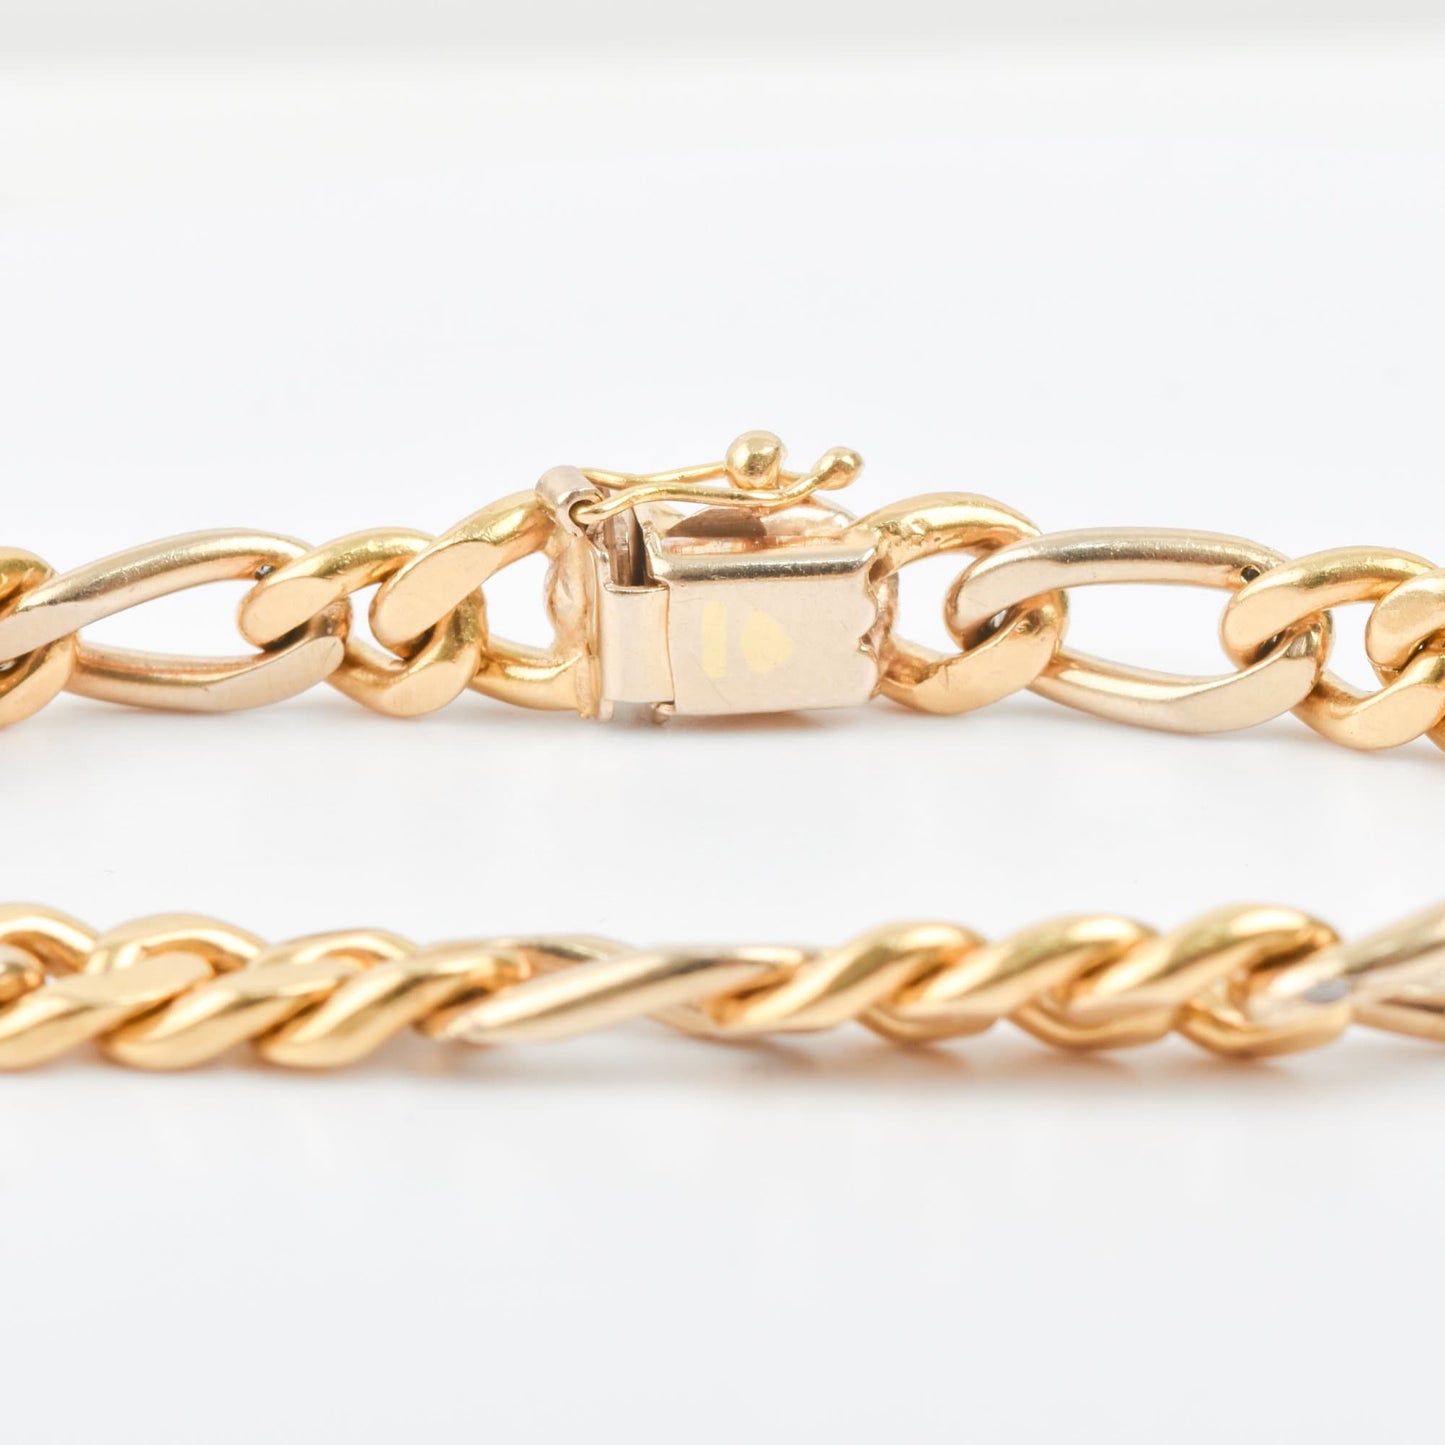 Solid 18K Diamond Figaro Bracelet In Yellow Gold, Modernist Gold Link Bracelet, Estate Jewelry, 7" L